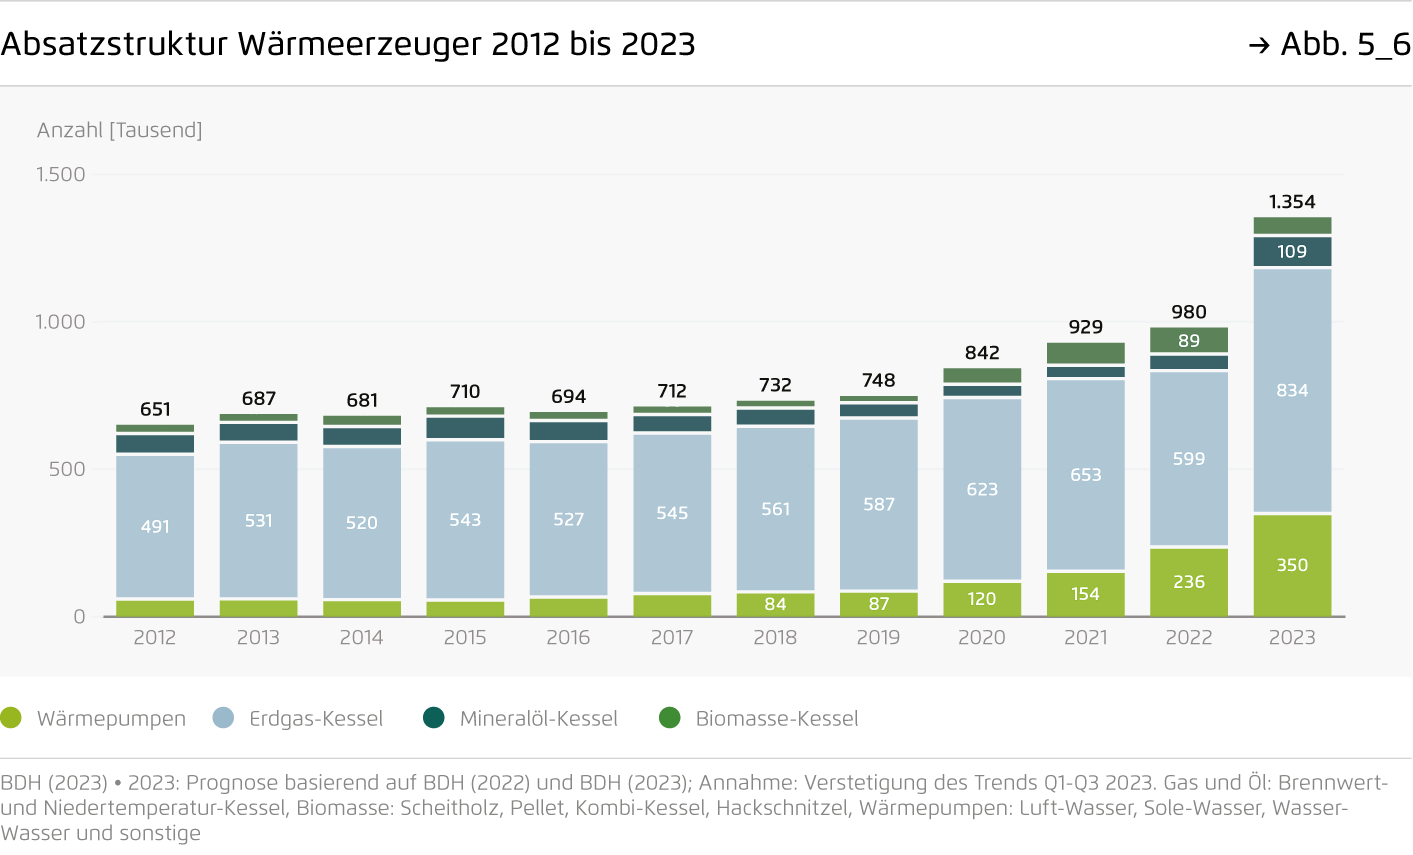 Preview for Absatzstruktur Wärmeerzeuger 2012 bis 2023